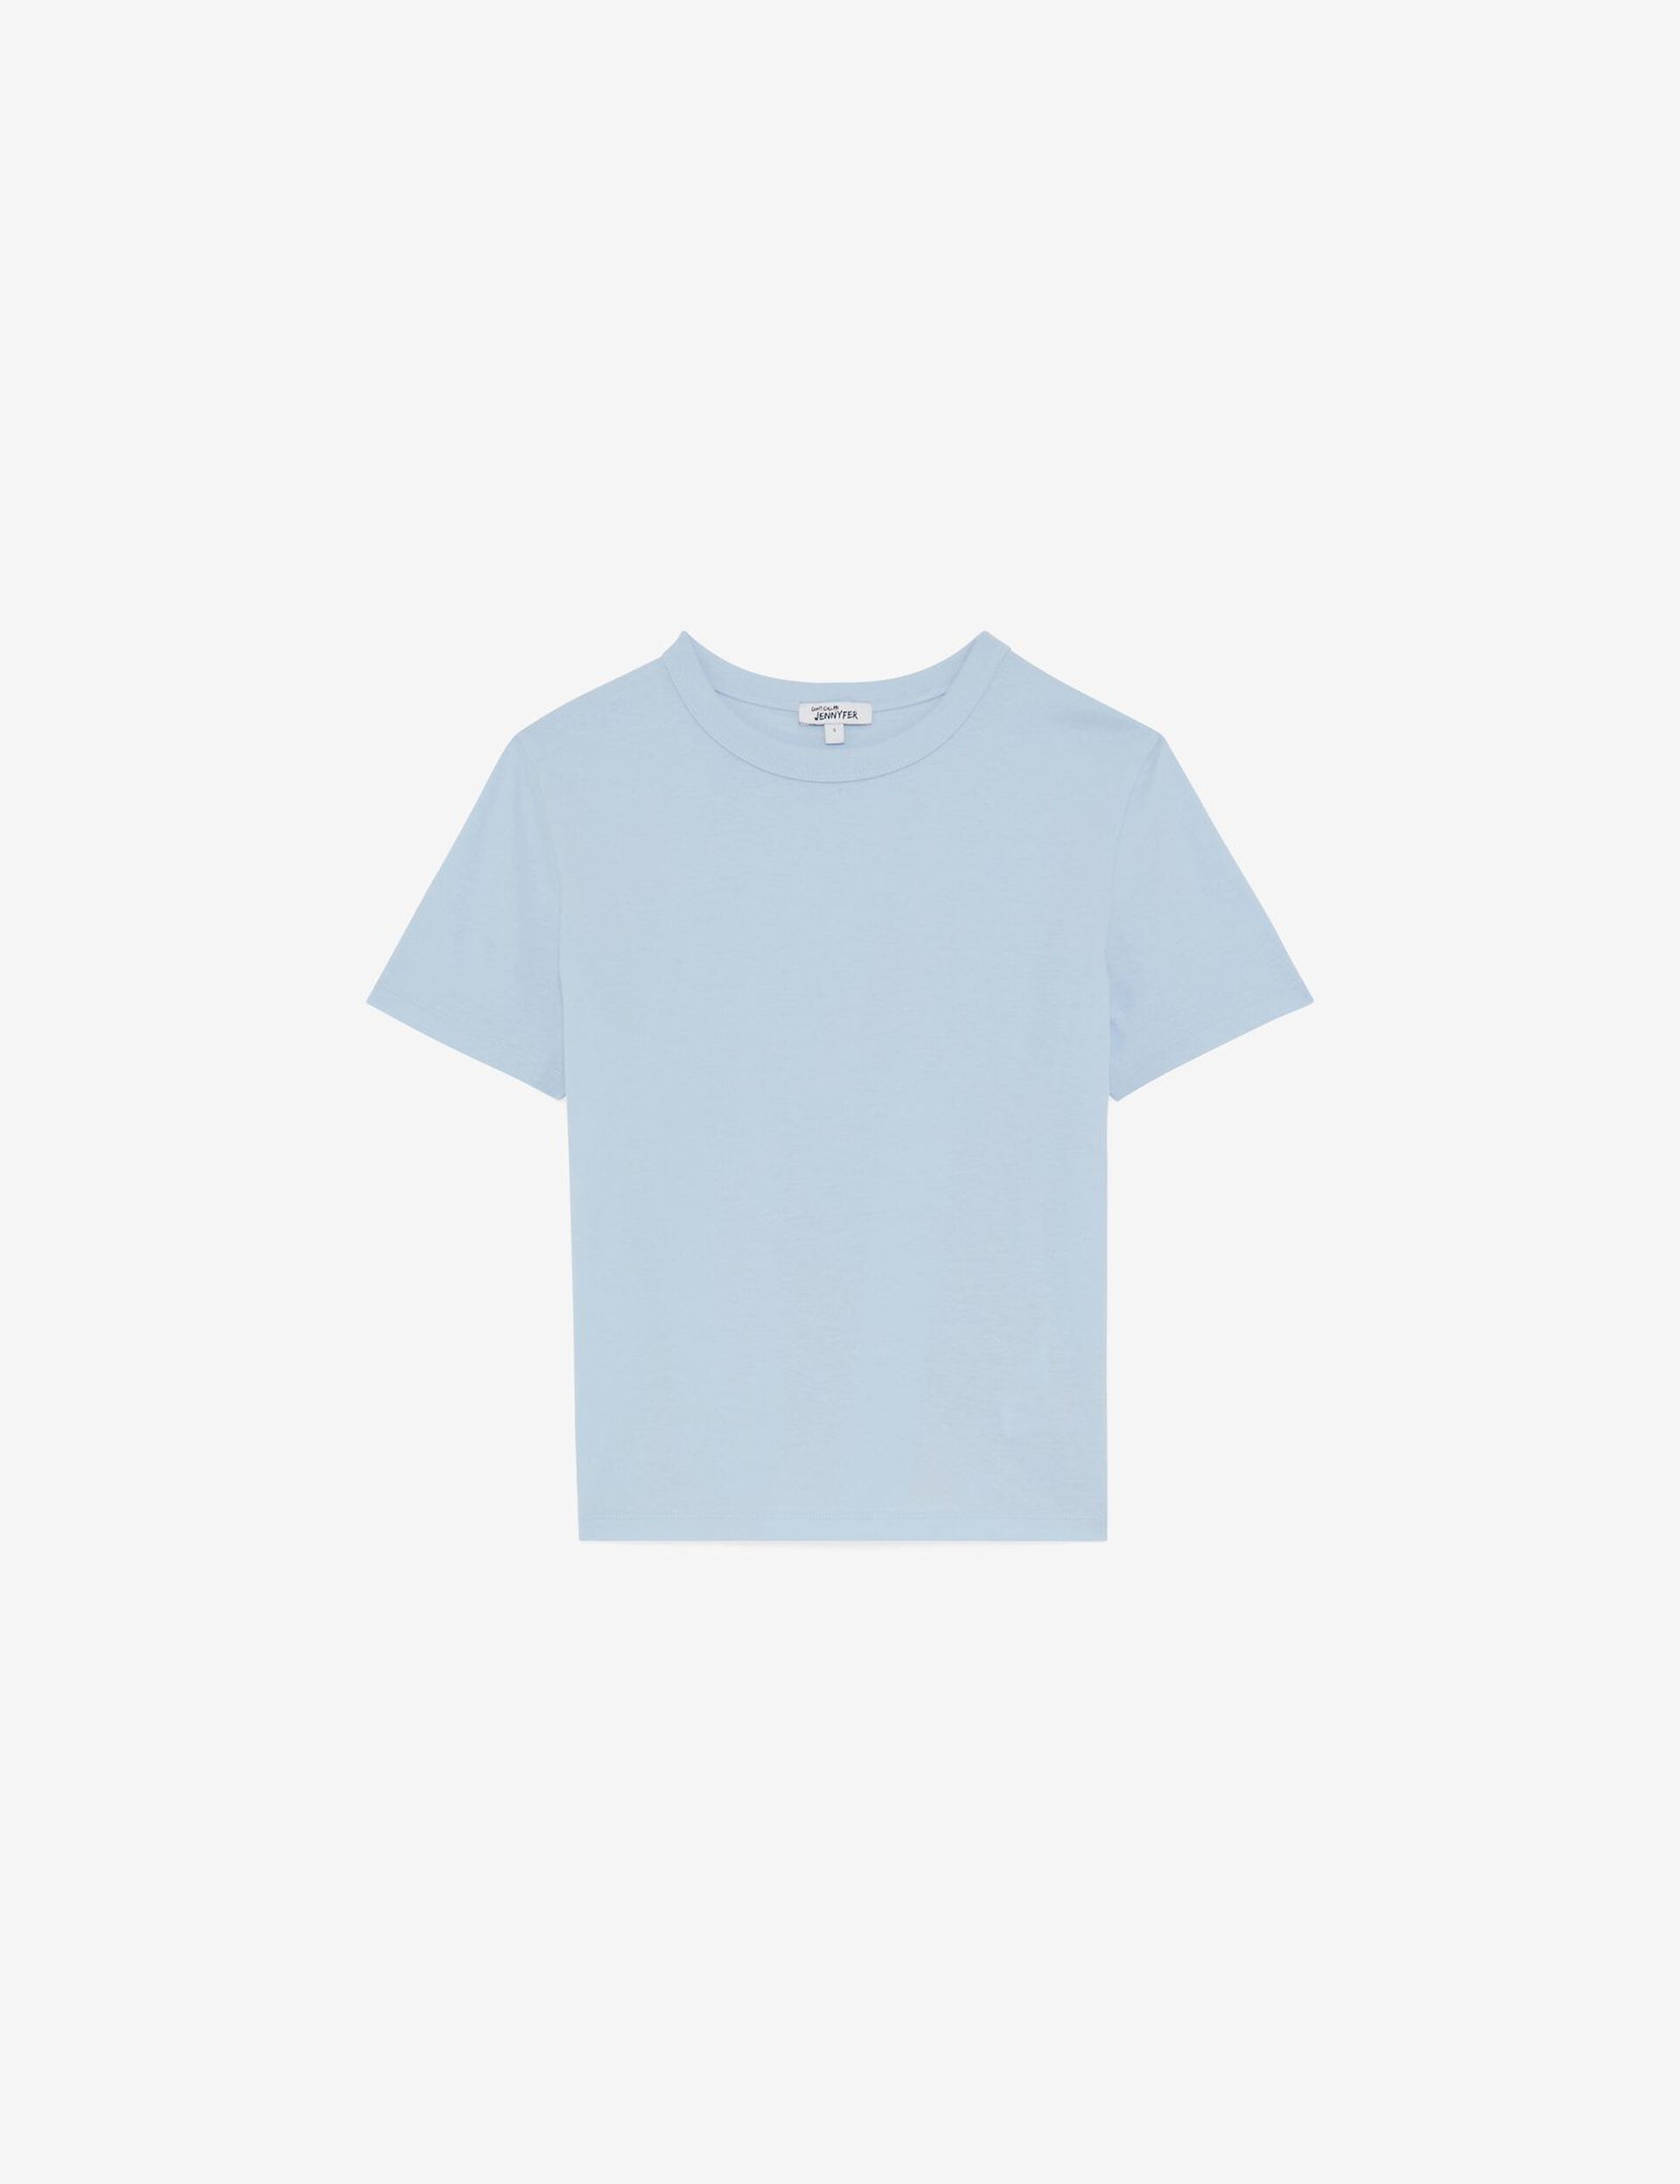 Tee-shirt basic bleu ciel